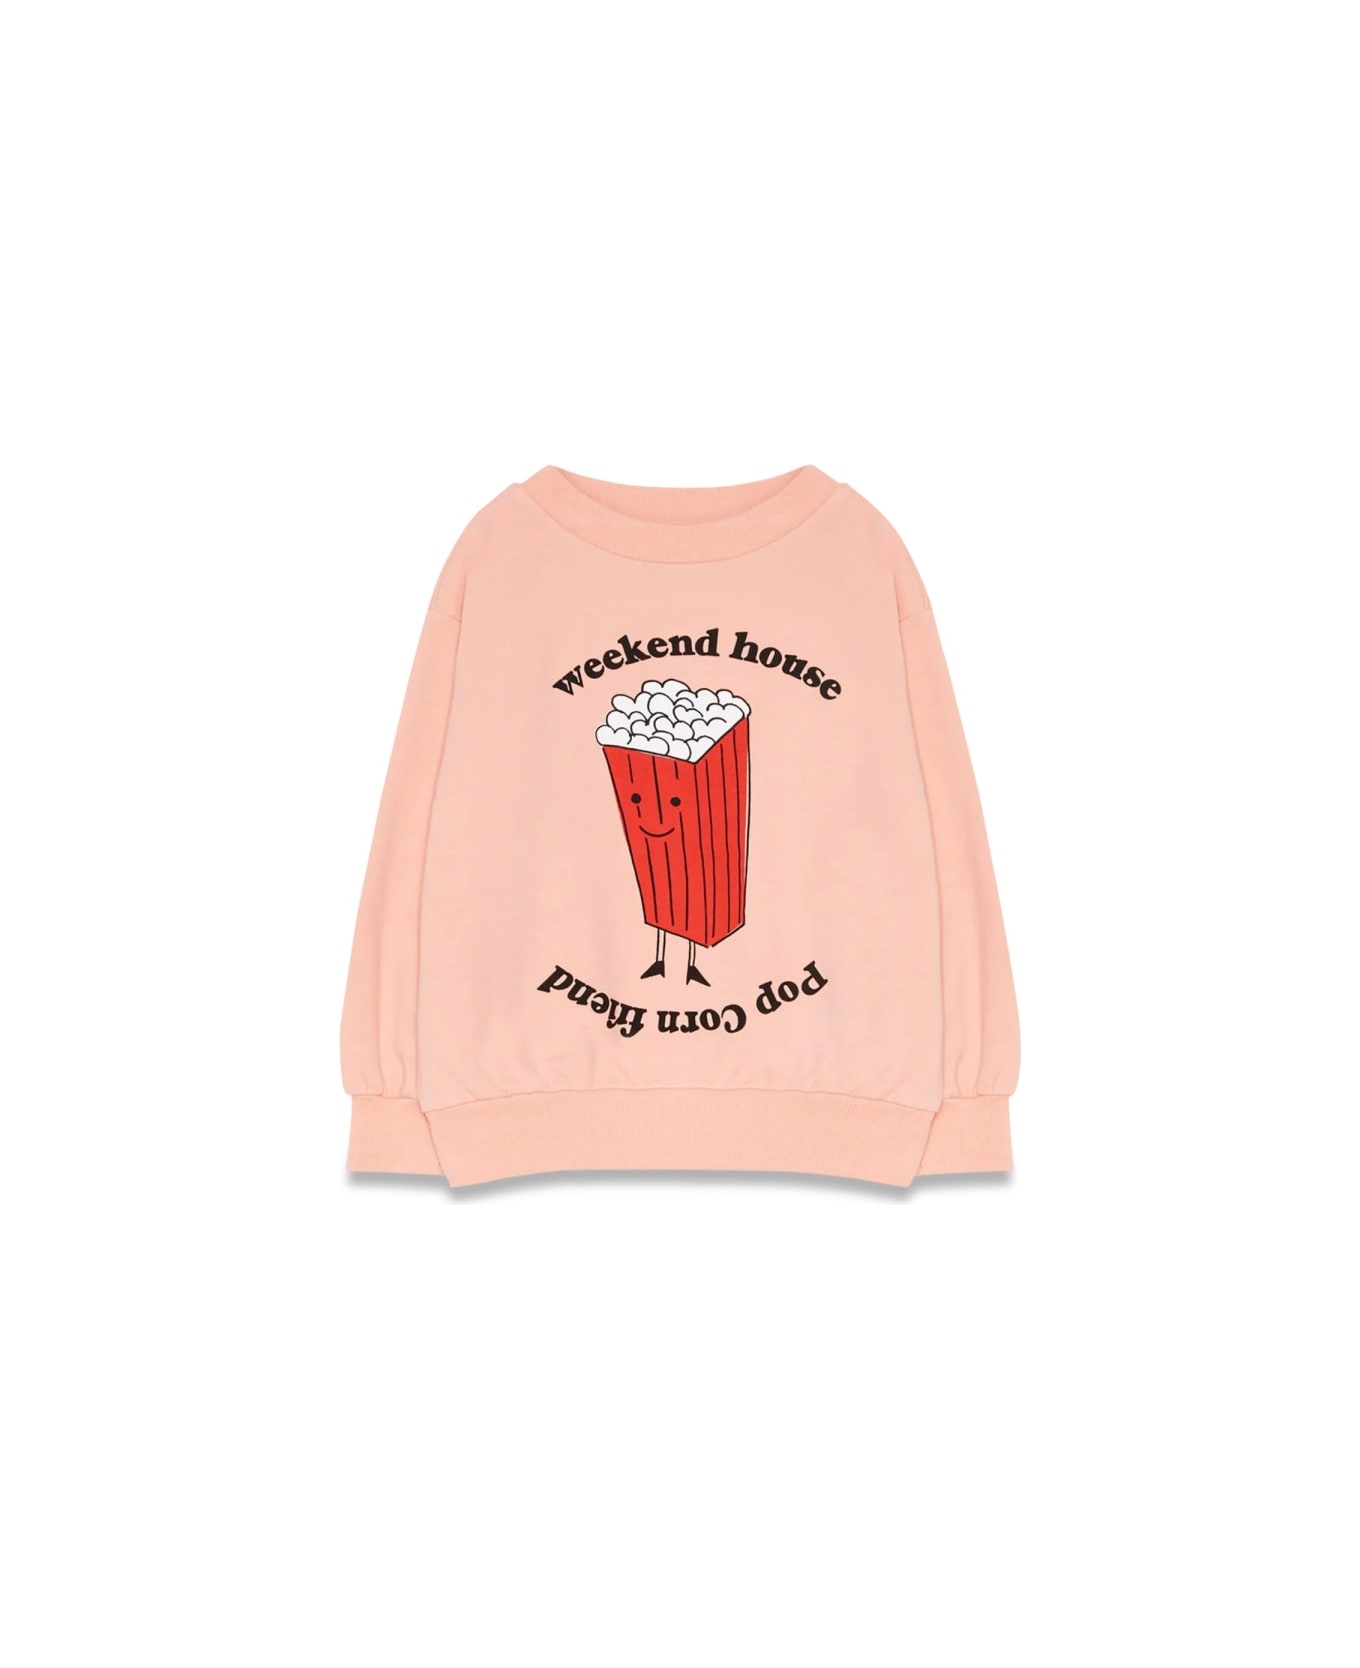 weekend house kids Popcorn Sweatshirt - PINK